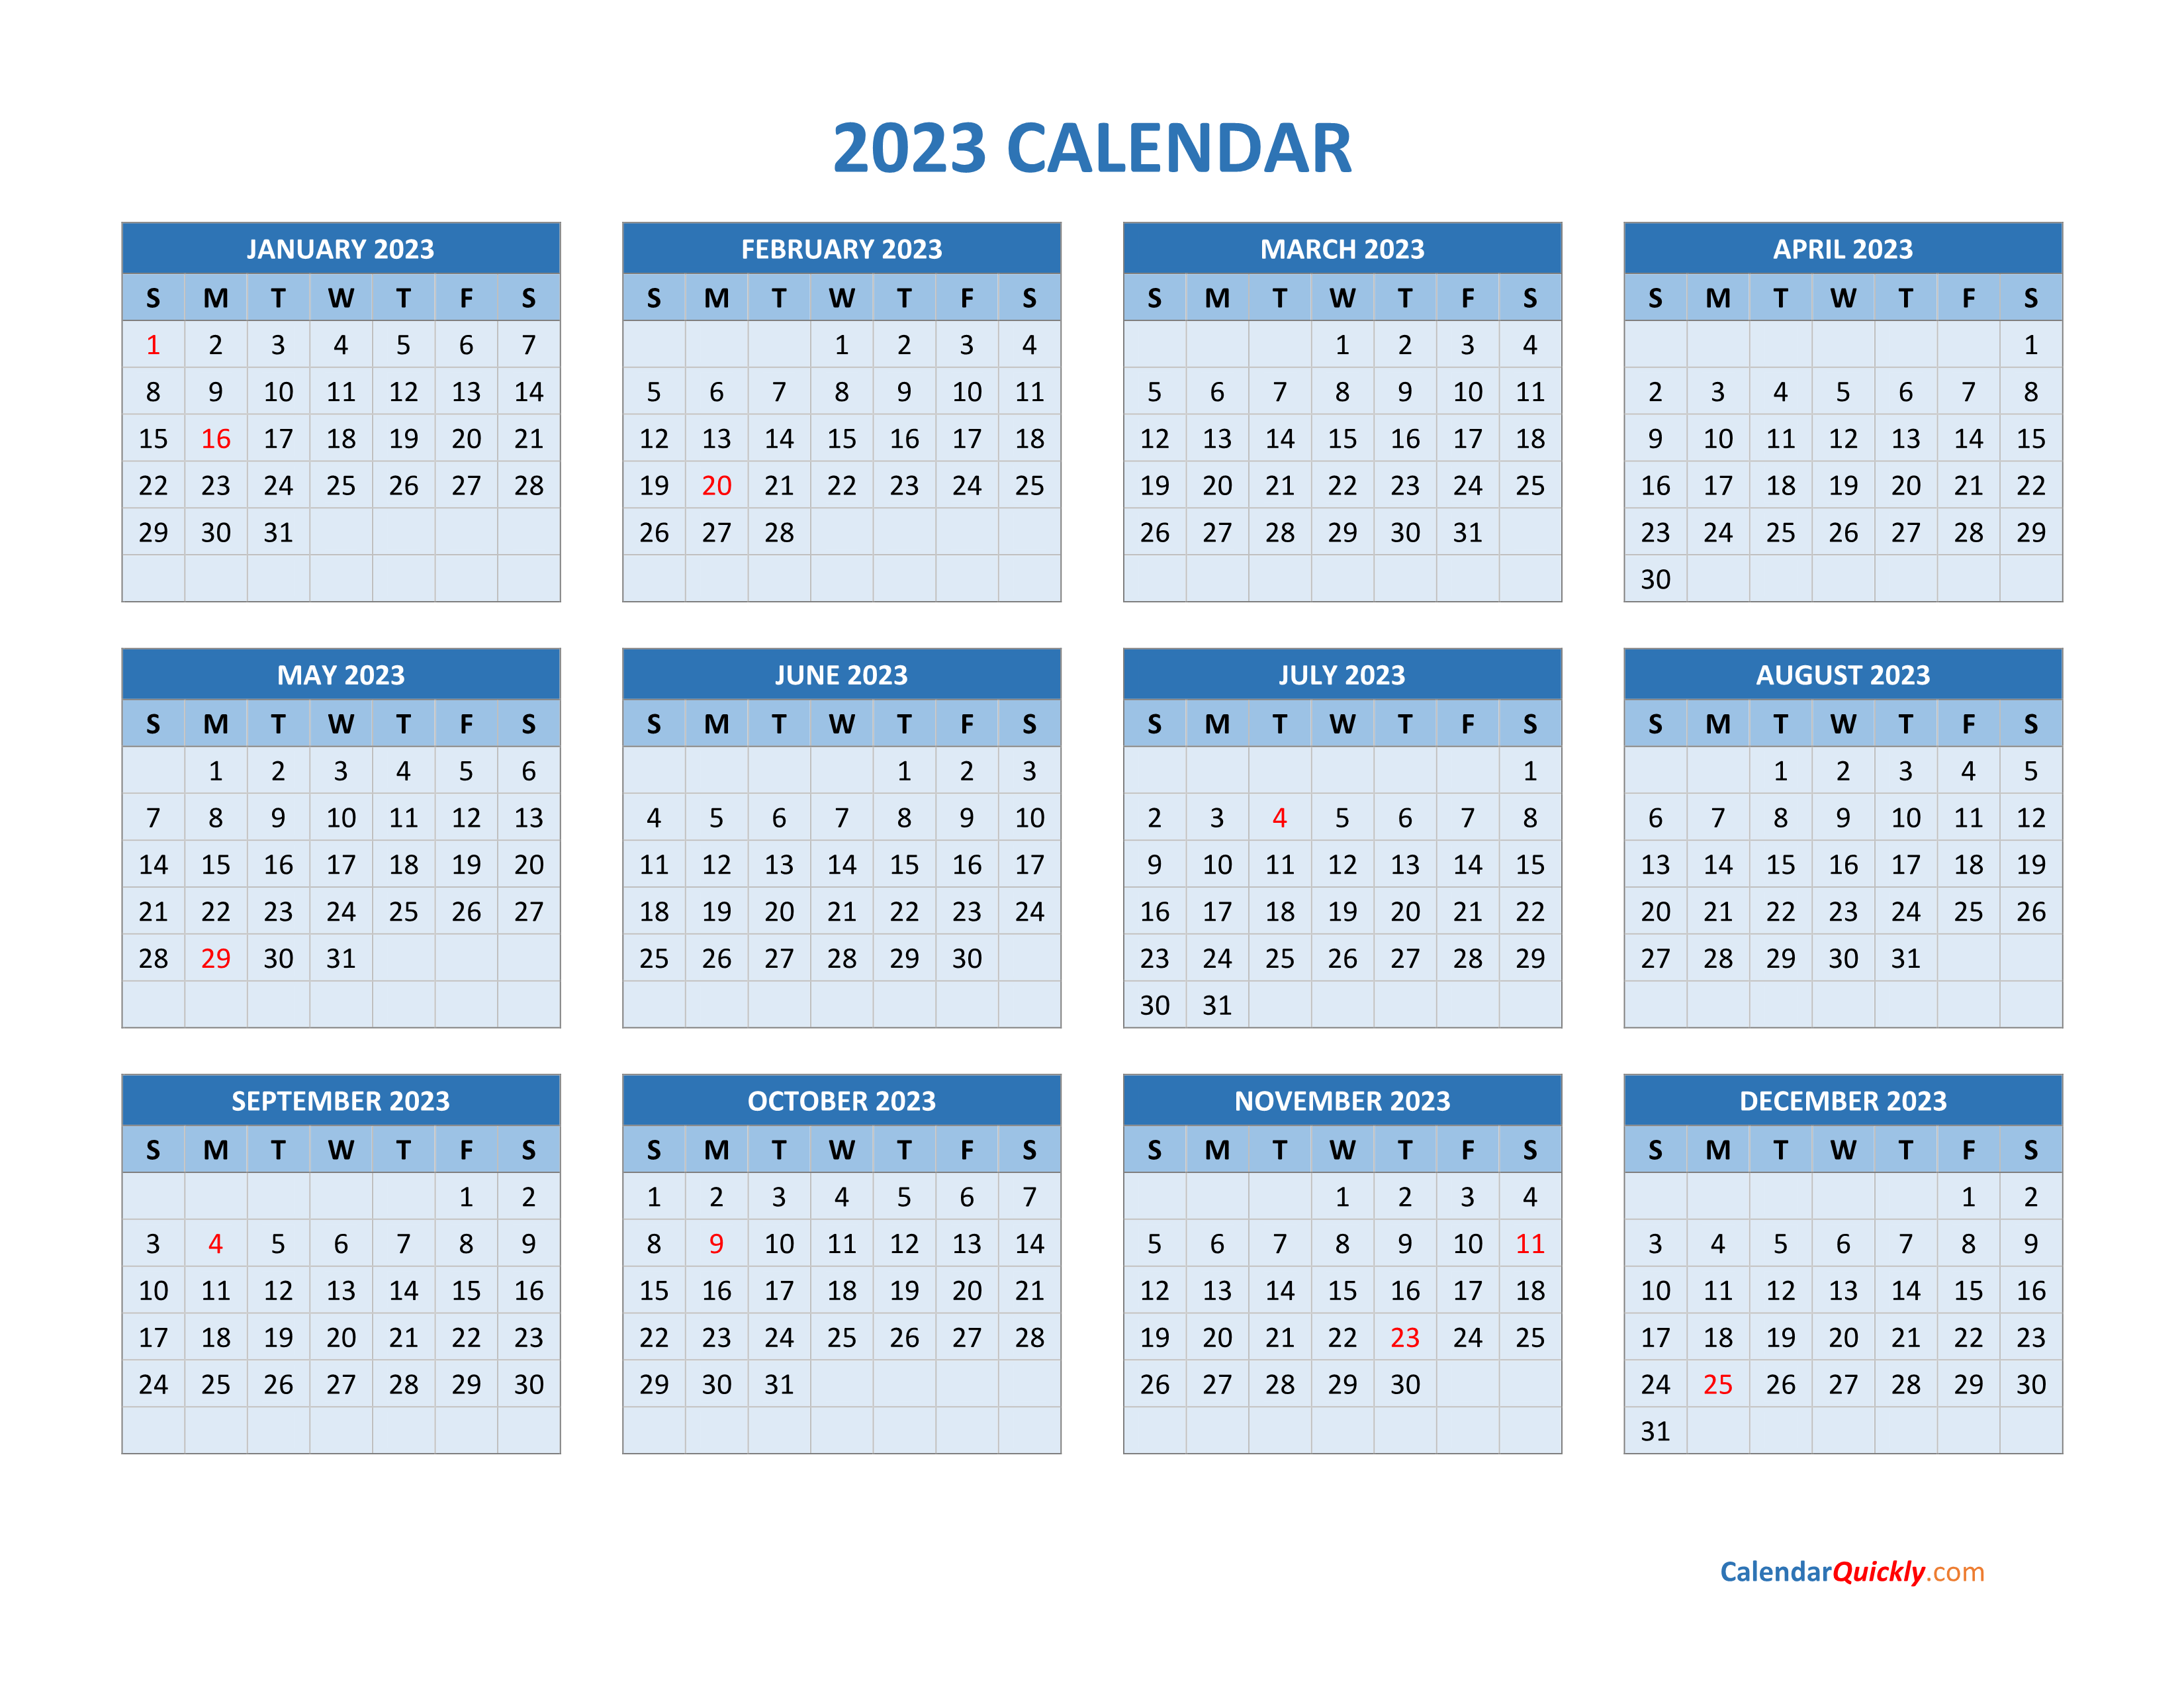 Calendar Year 2023 Calendar Time And Date Calendar 2023 Canada